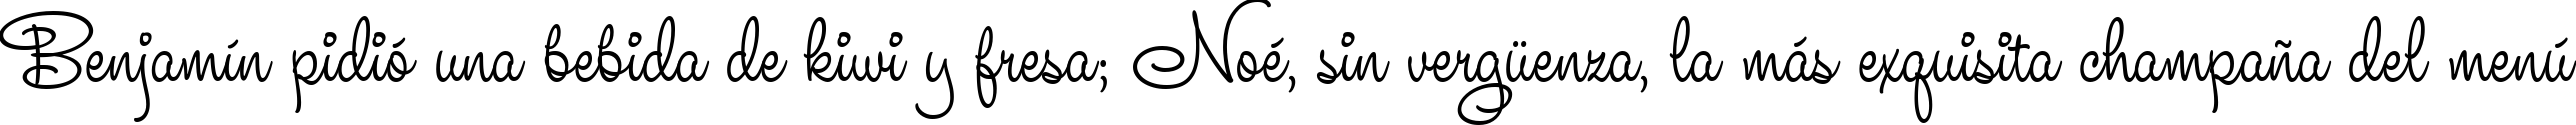 Пример написания шрифтом Teddy Bear текста на испанском